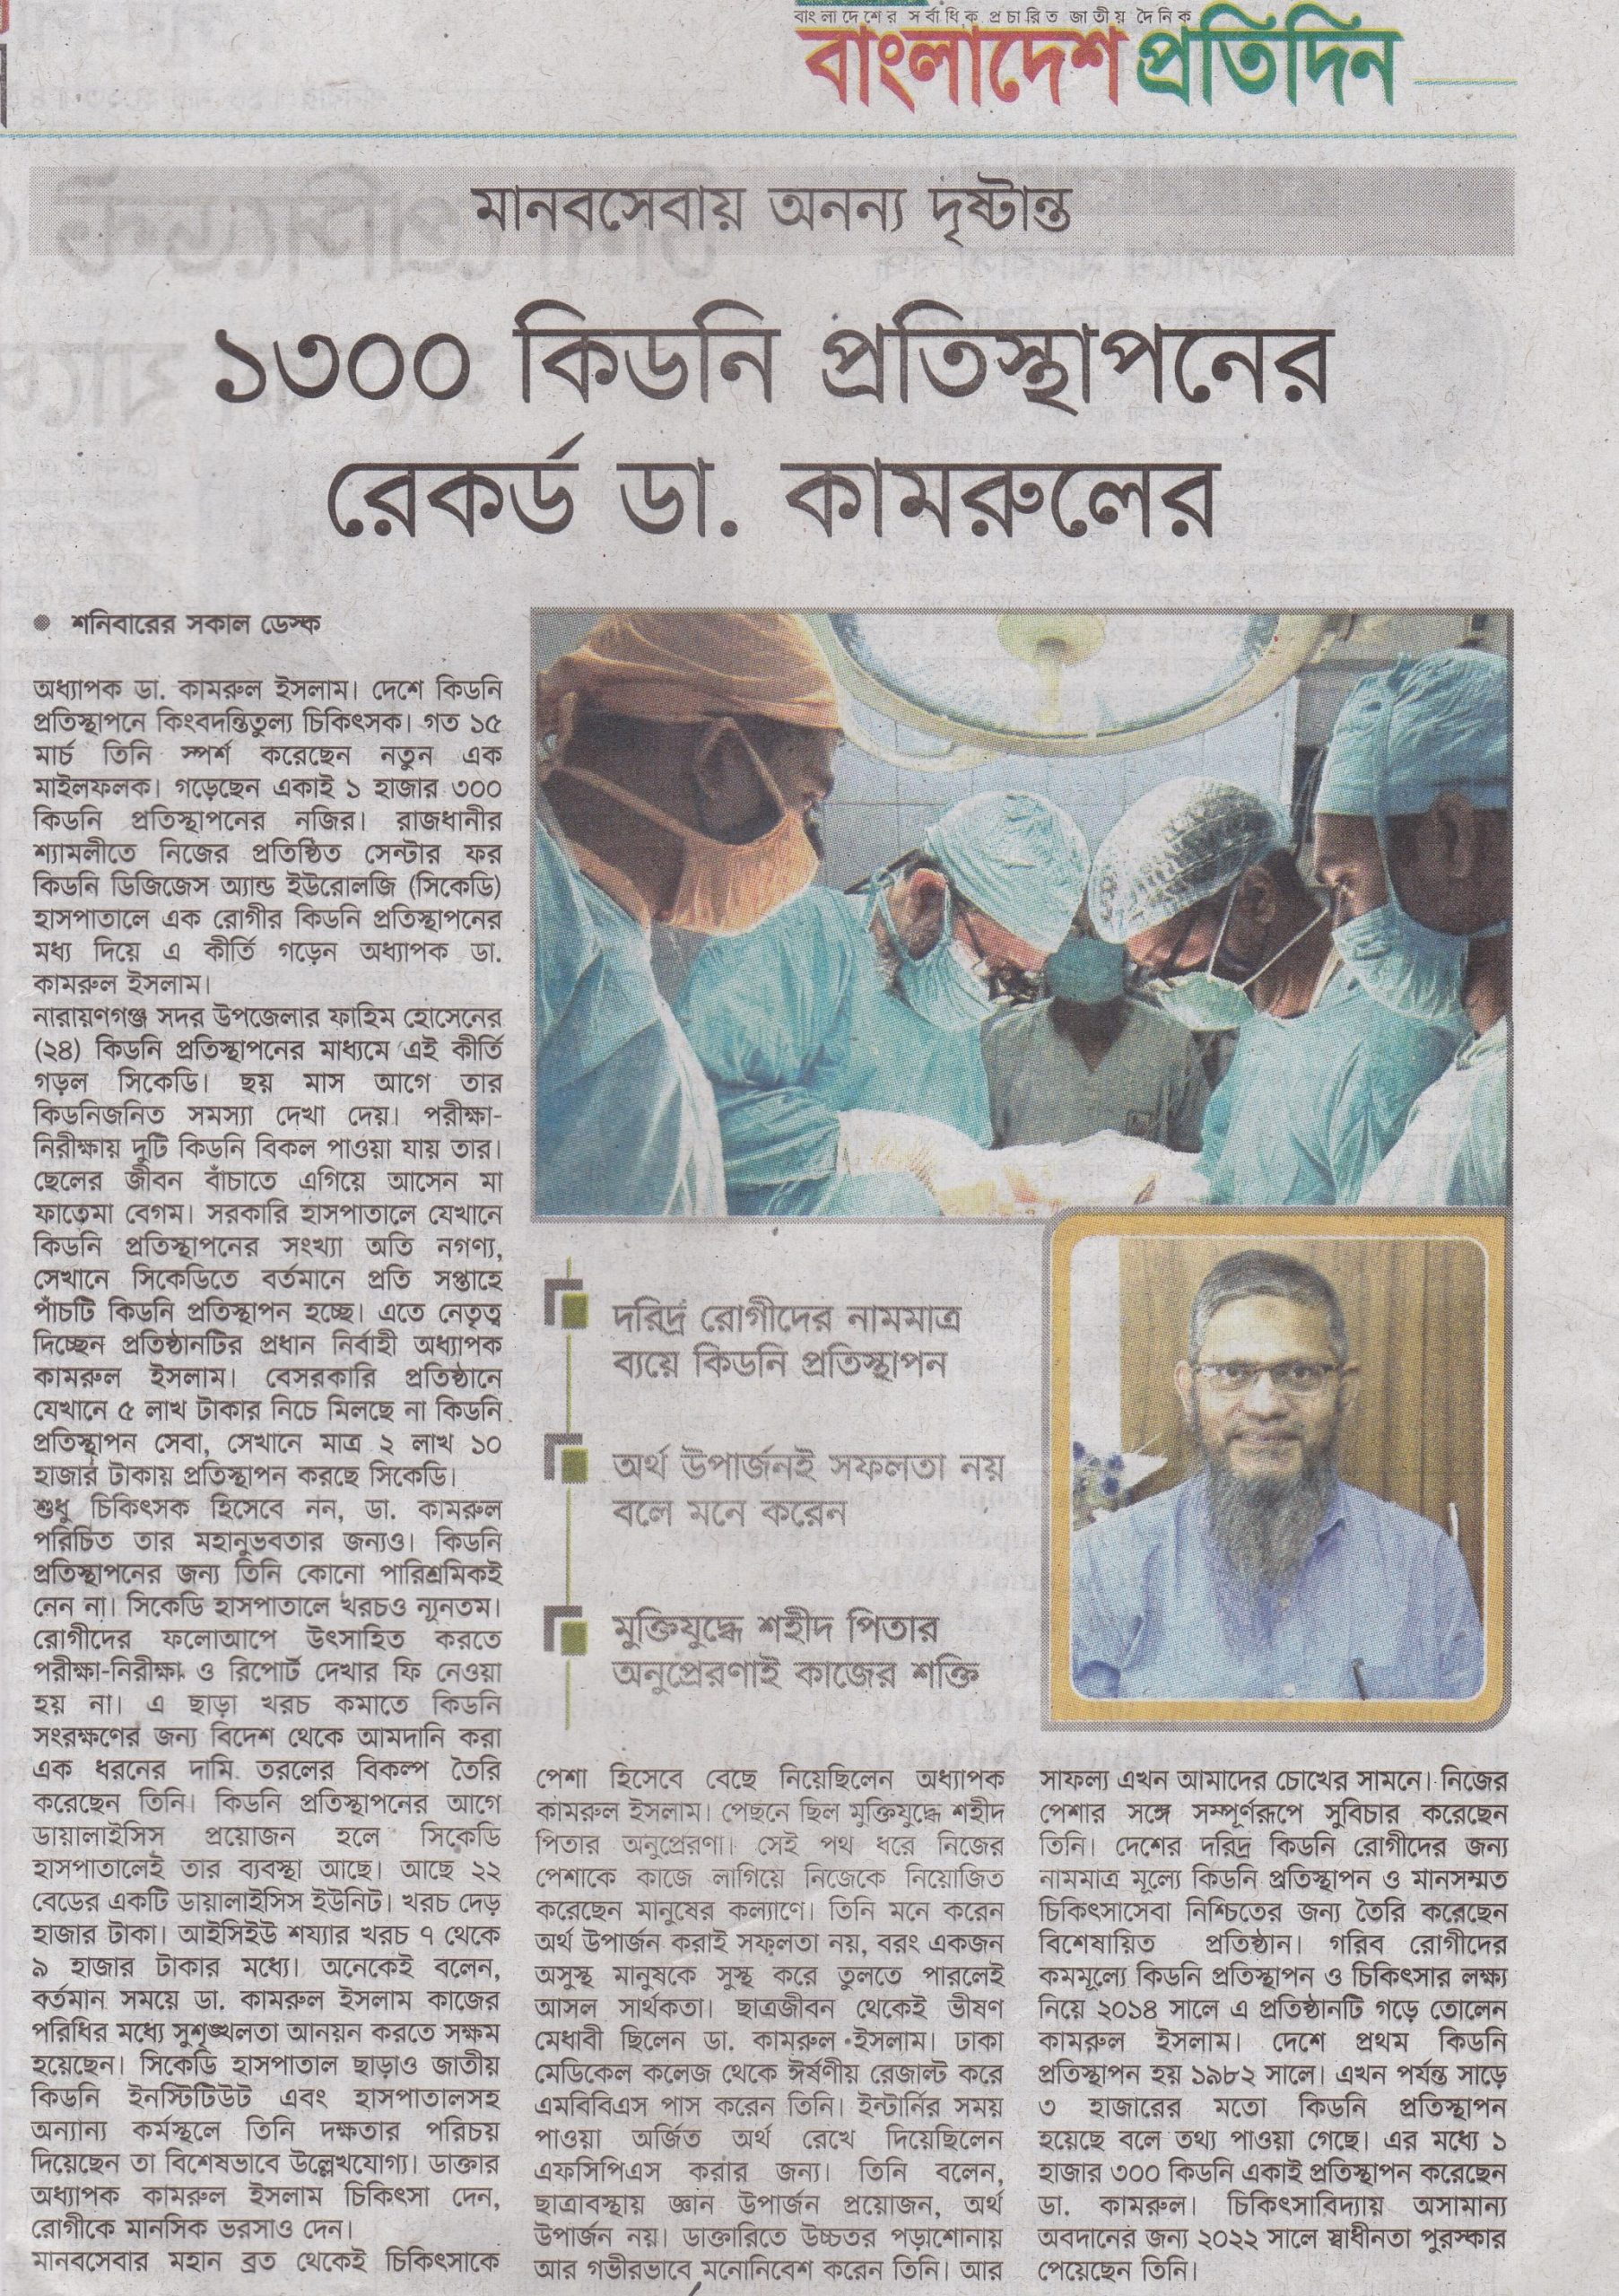 kidney transplant done by dr kamrul islam